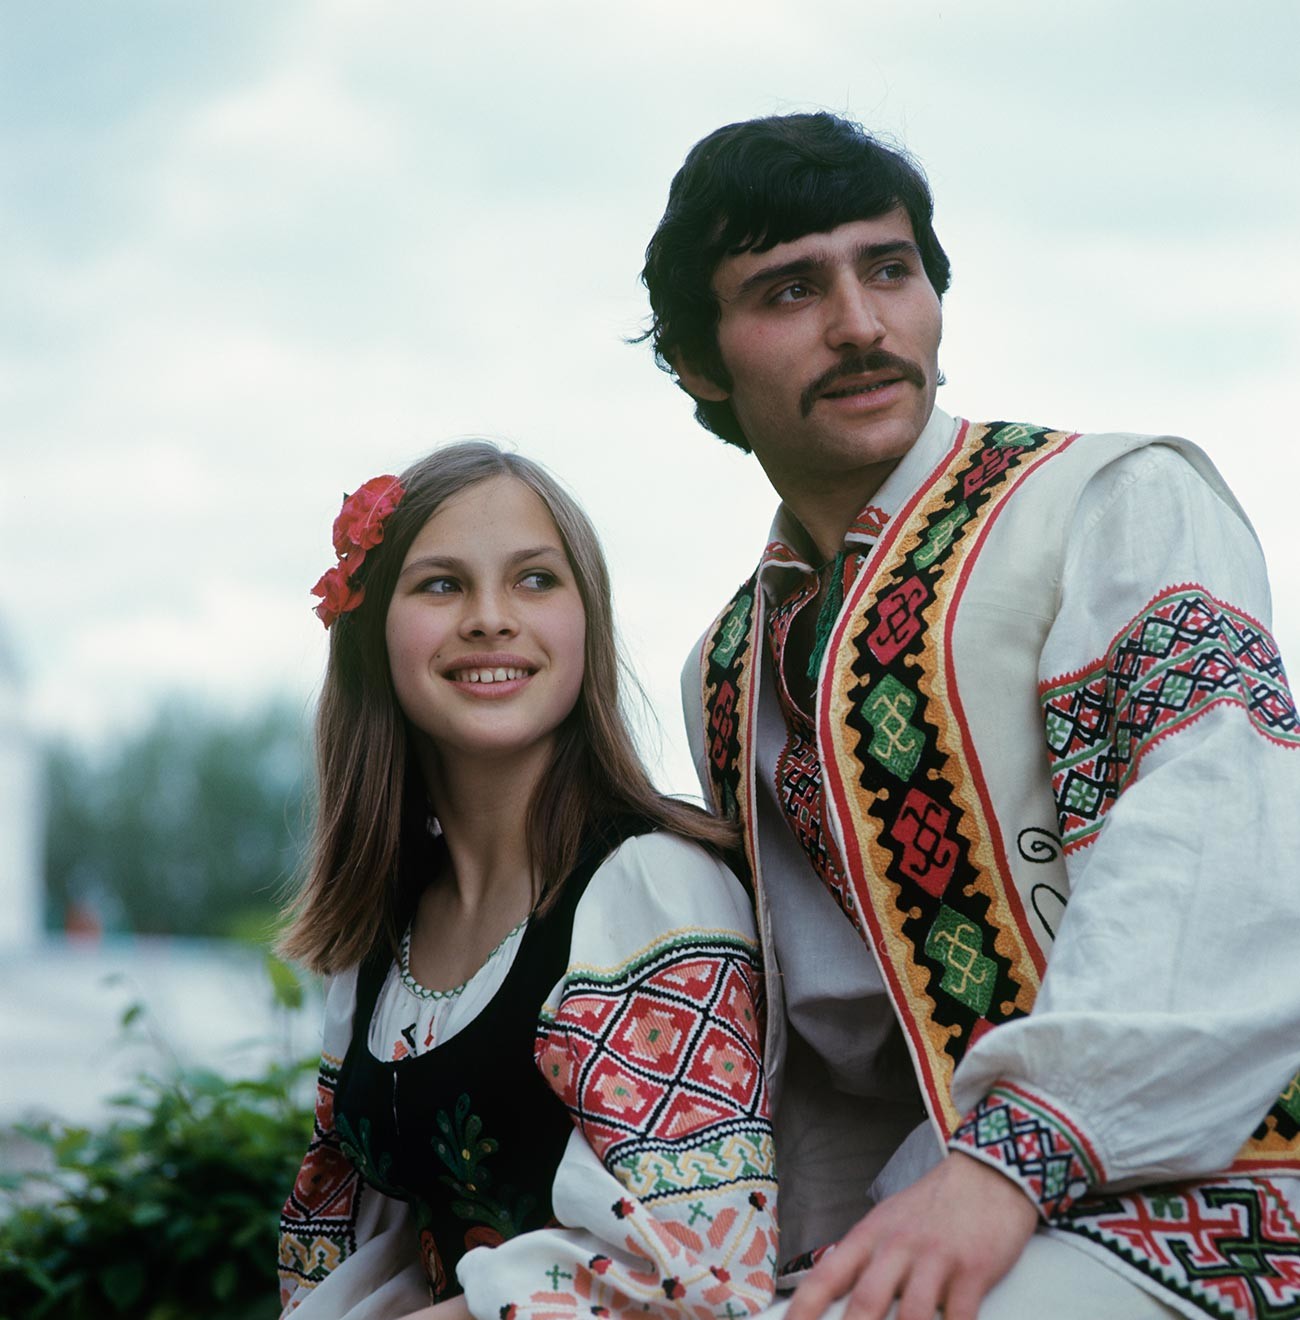 Ensemble de danse traditionnelle « Moldavaneska », 1975
